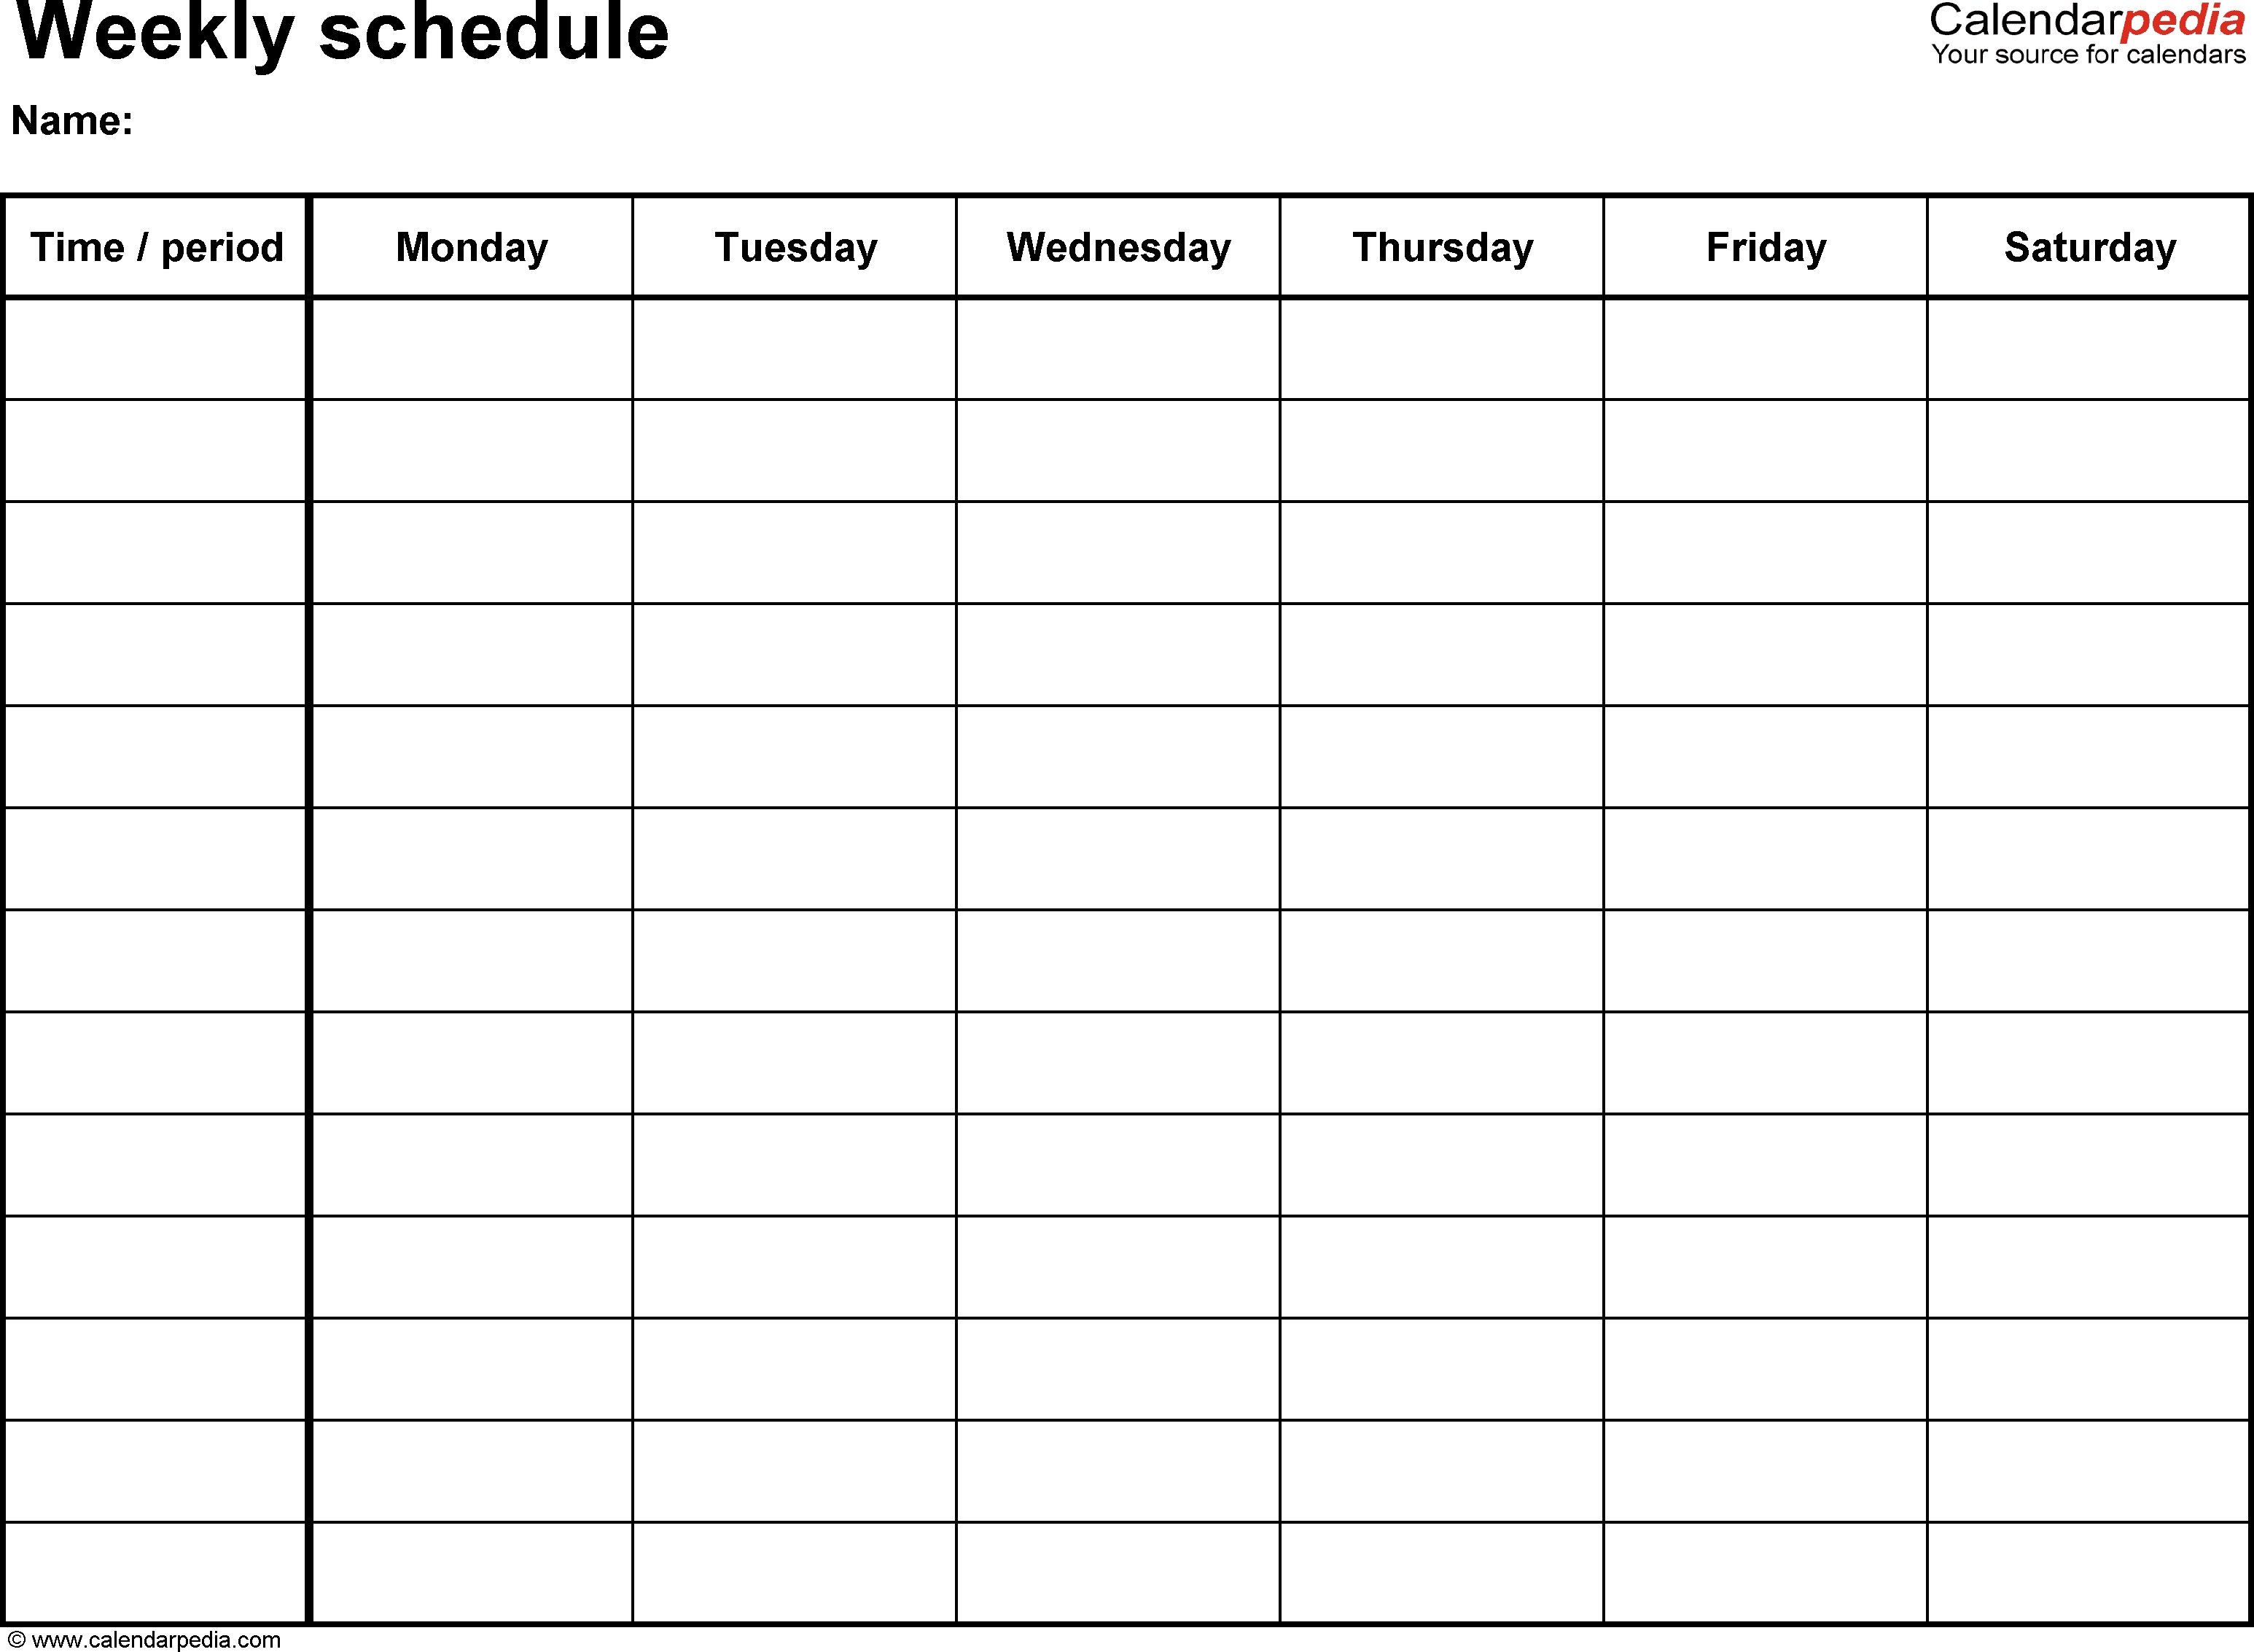 Free Weekly Schedule Templates For Word - 18 Templates Dashing One Week Calendar Printable Blank